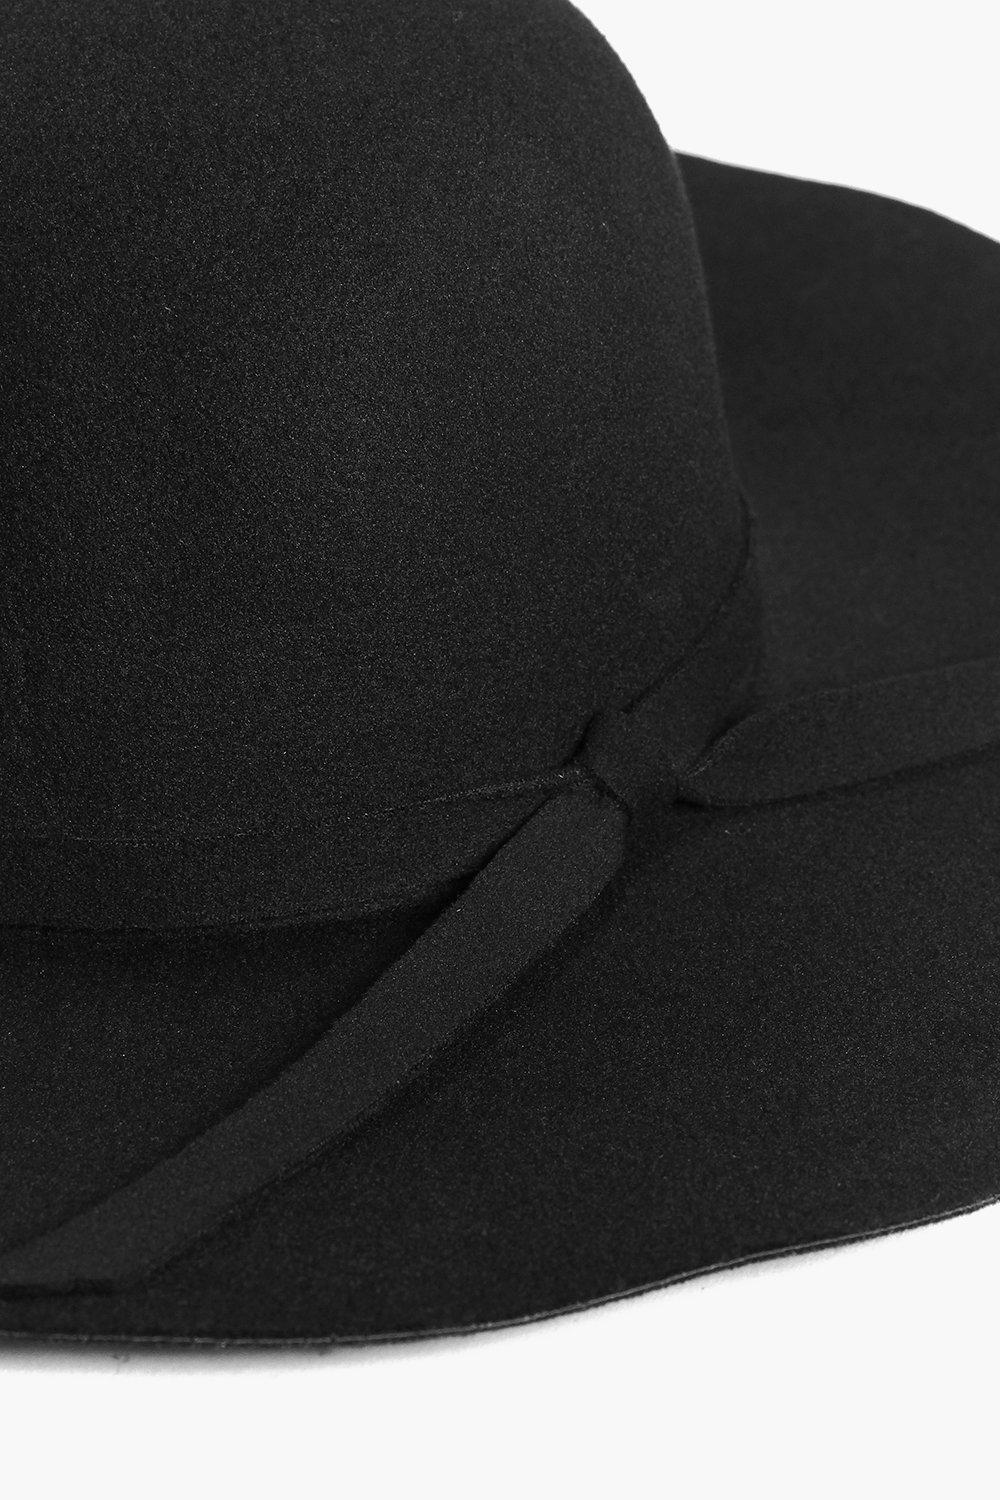 czarny okrągły kapelusz